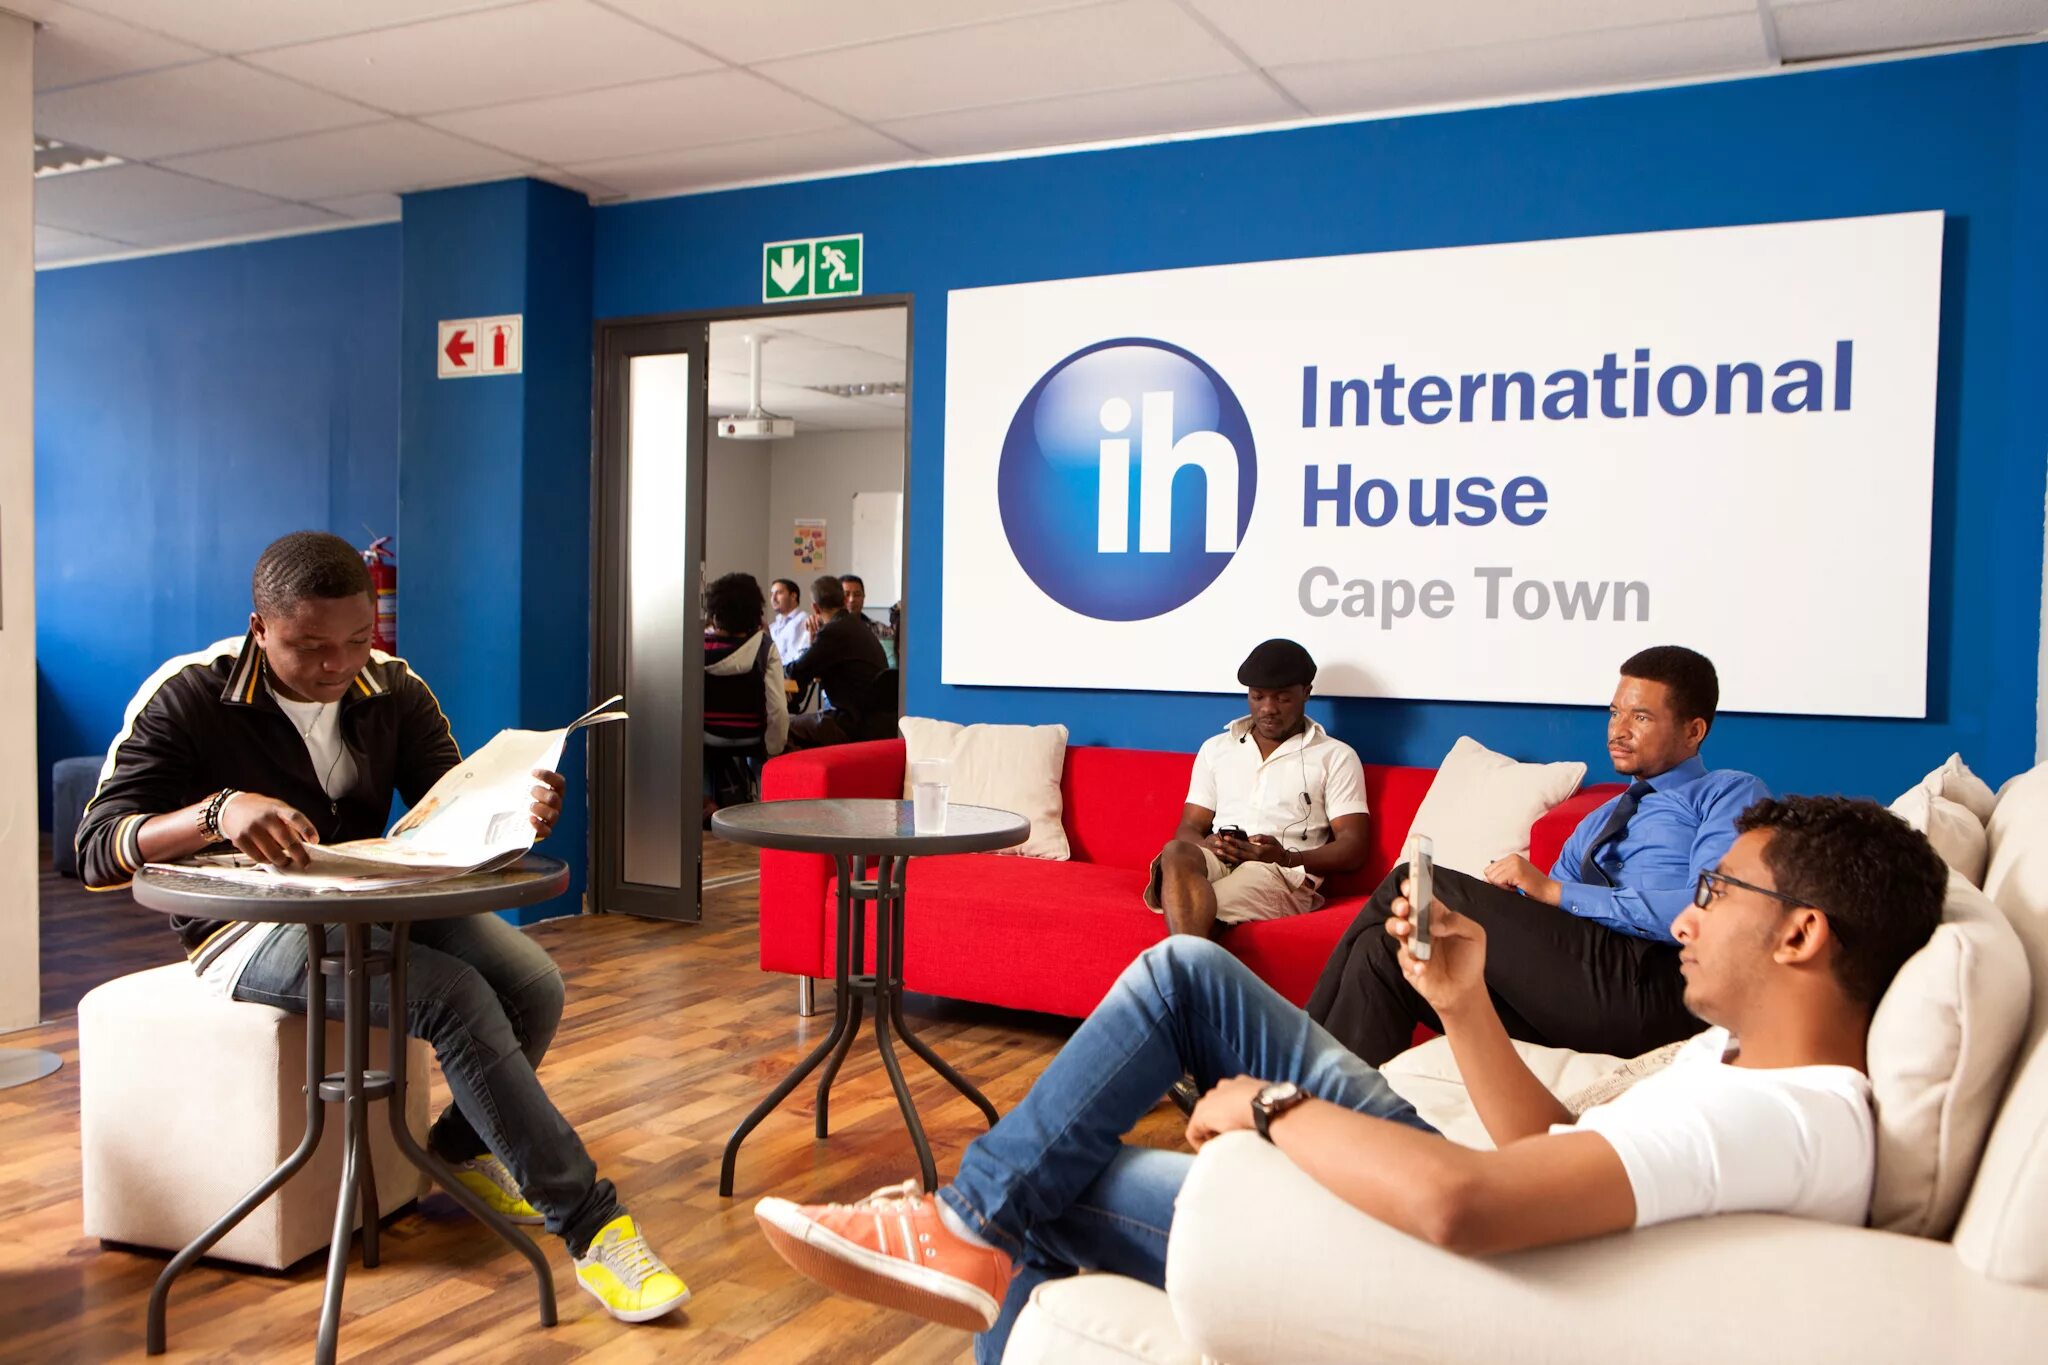 International House. BKC International House. International House Манчестер. International House World organisation.